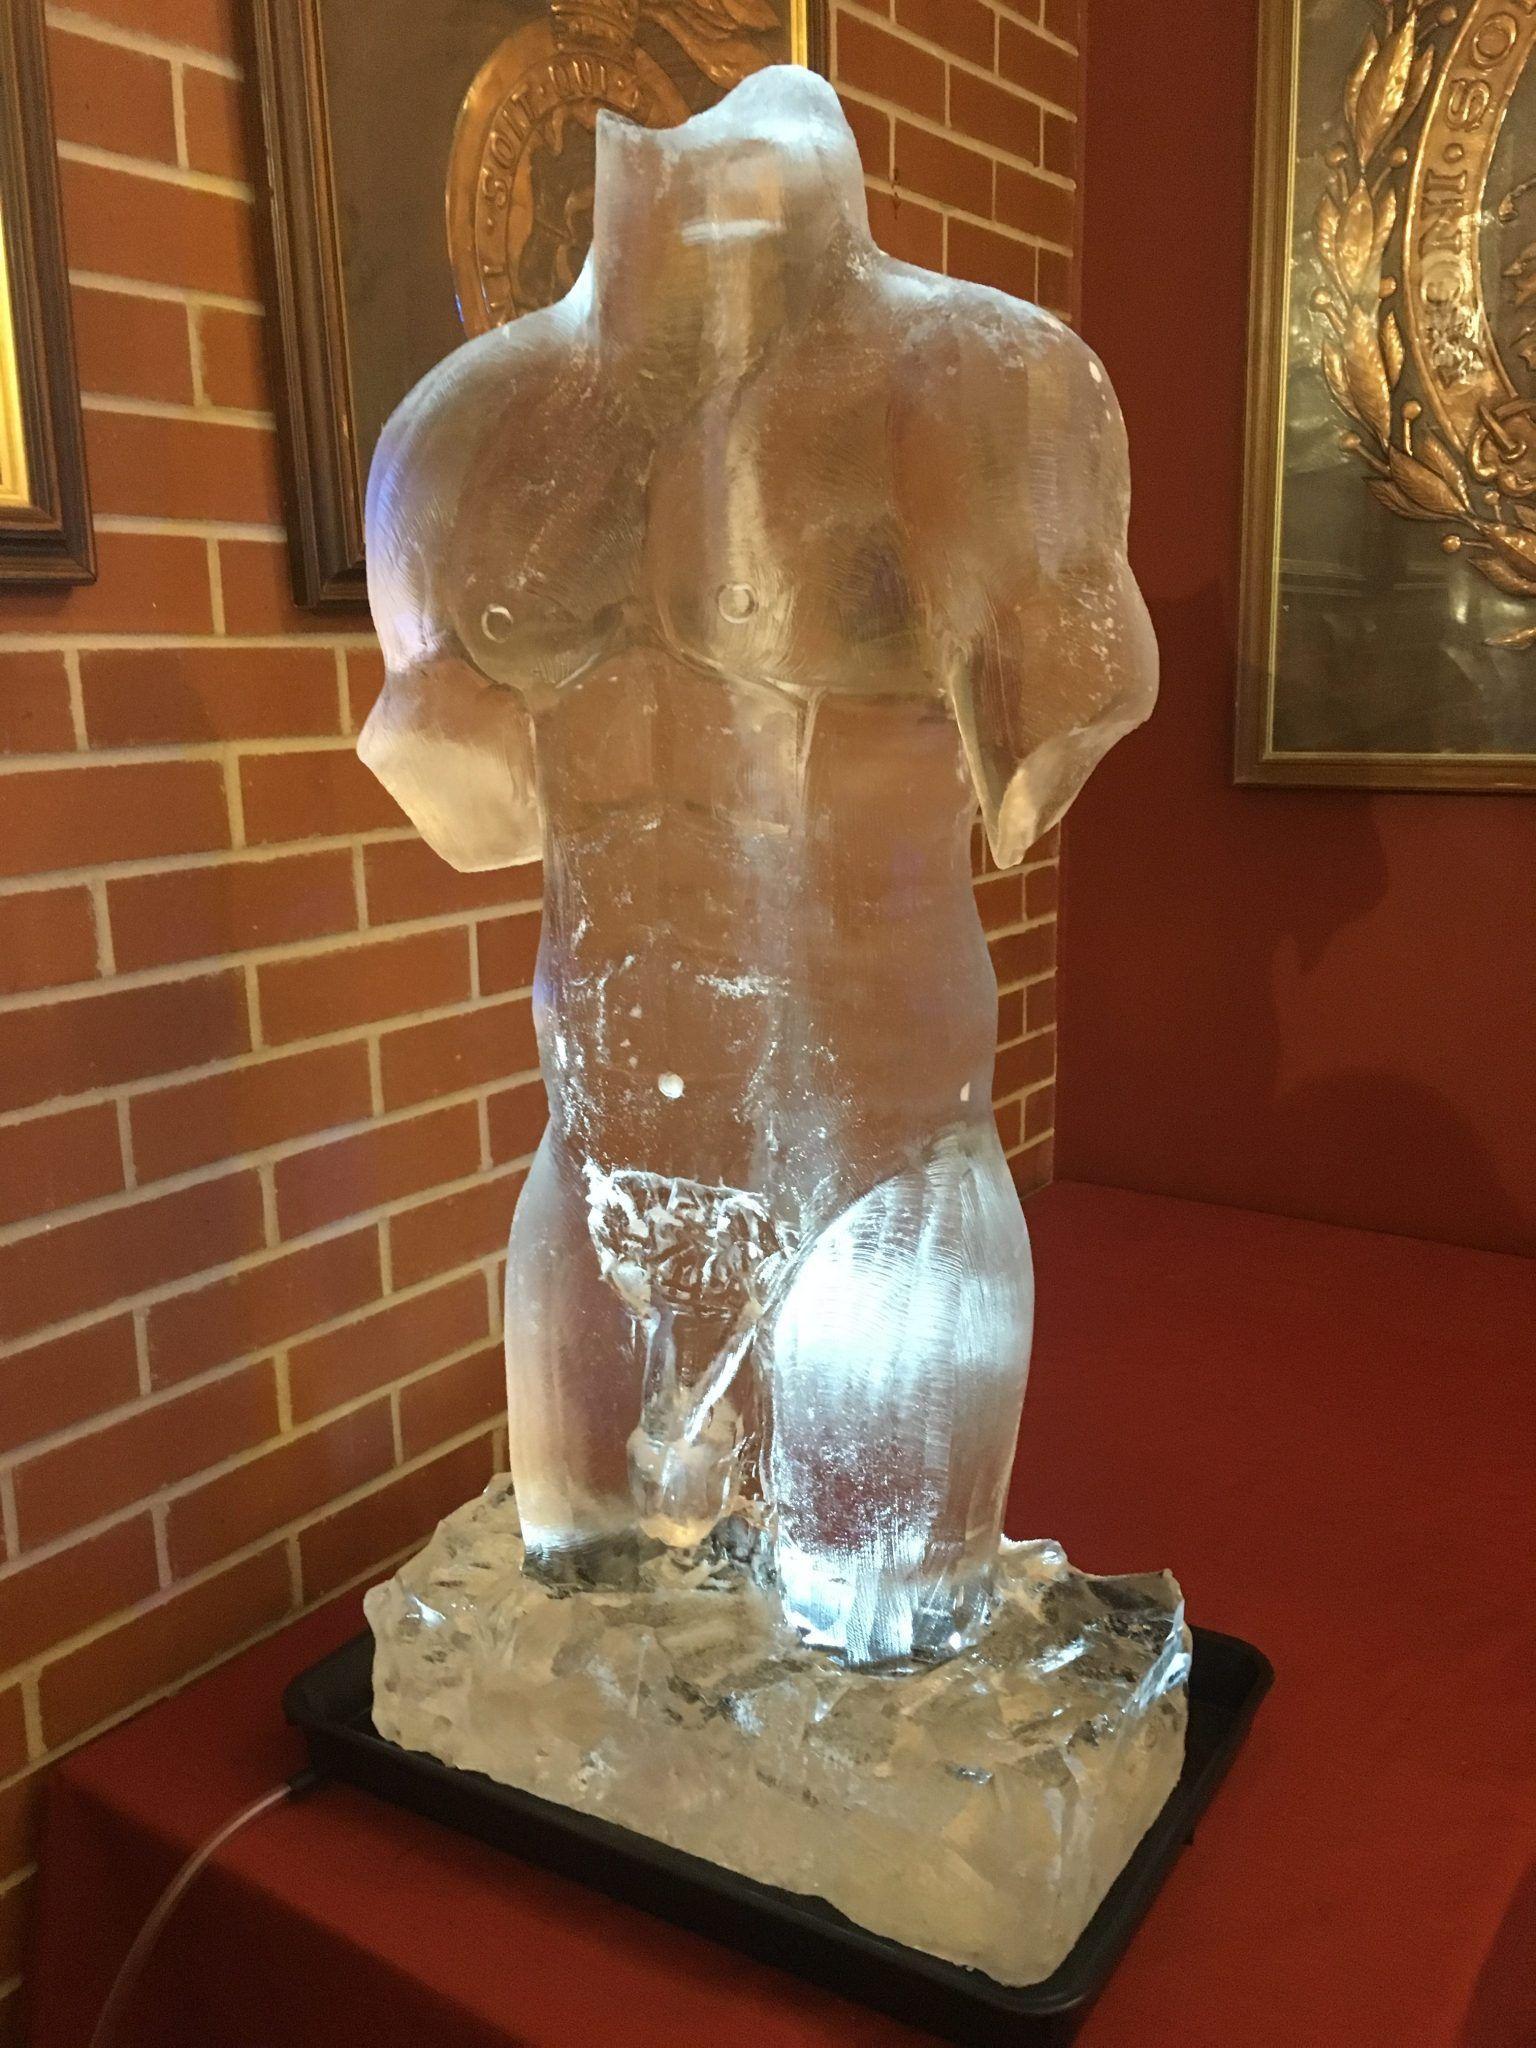 Cock ice sculpture